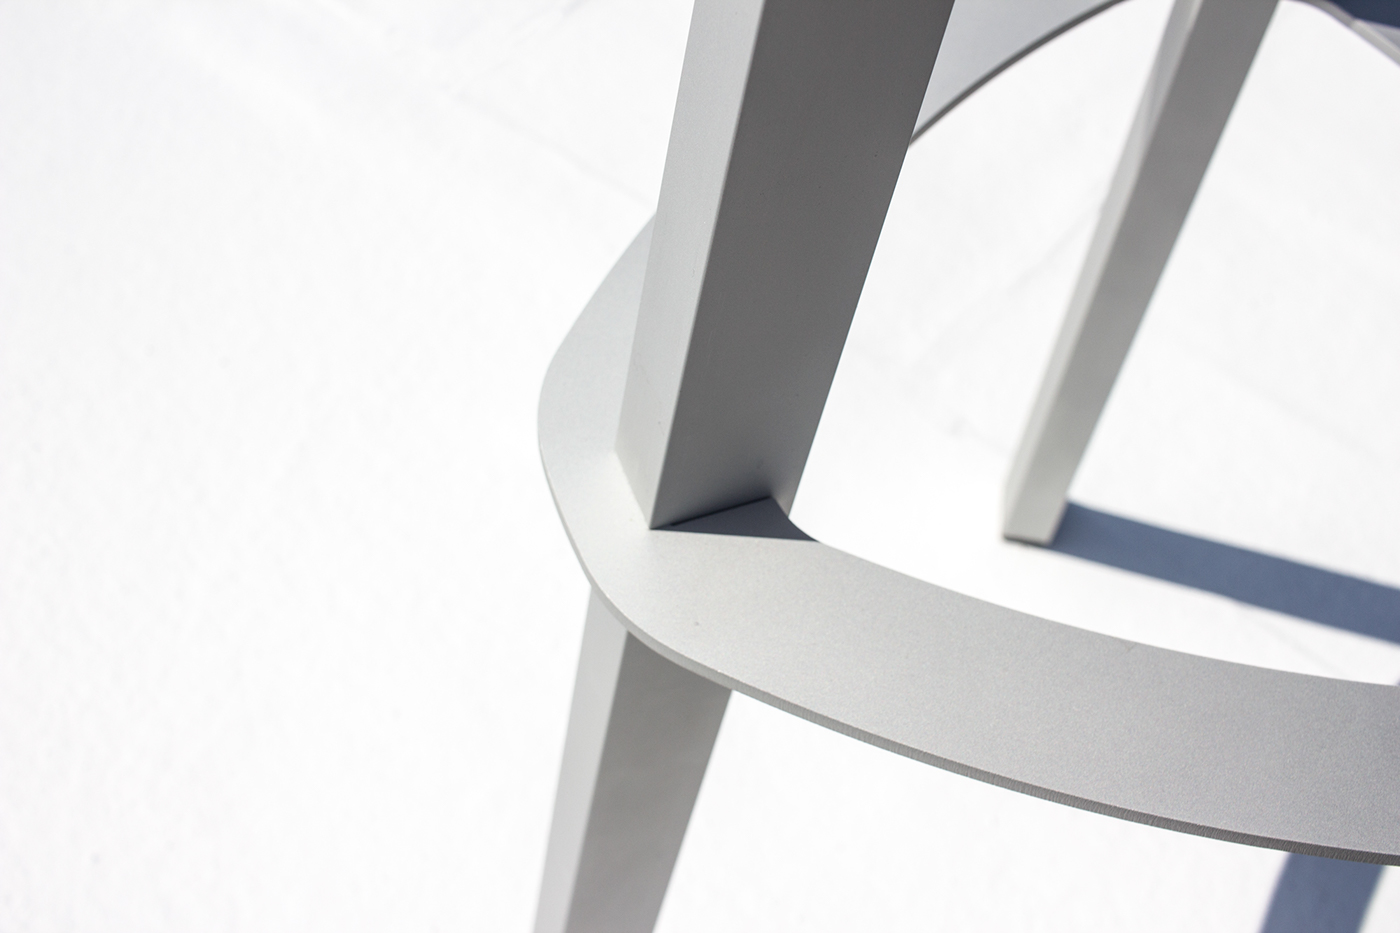 furniture stool industrial design  simple aluminum aluminium flat pack chair barstool hardwood